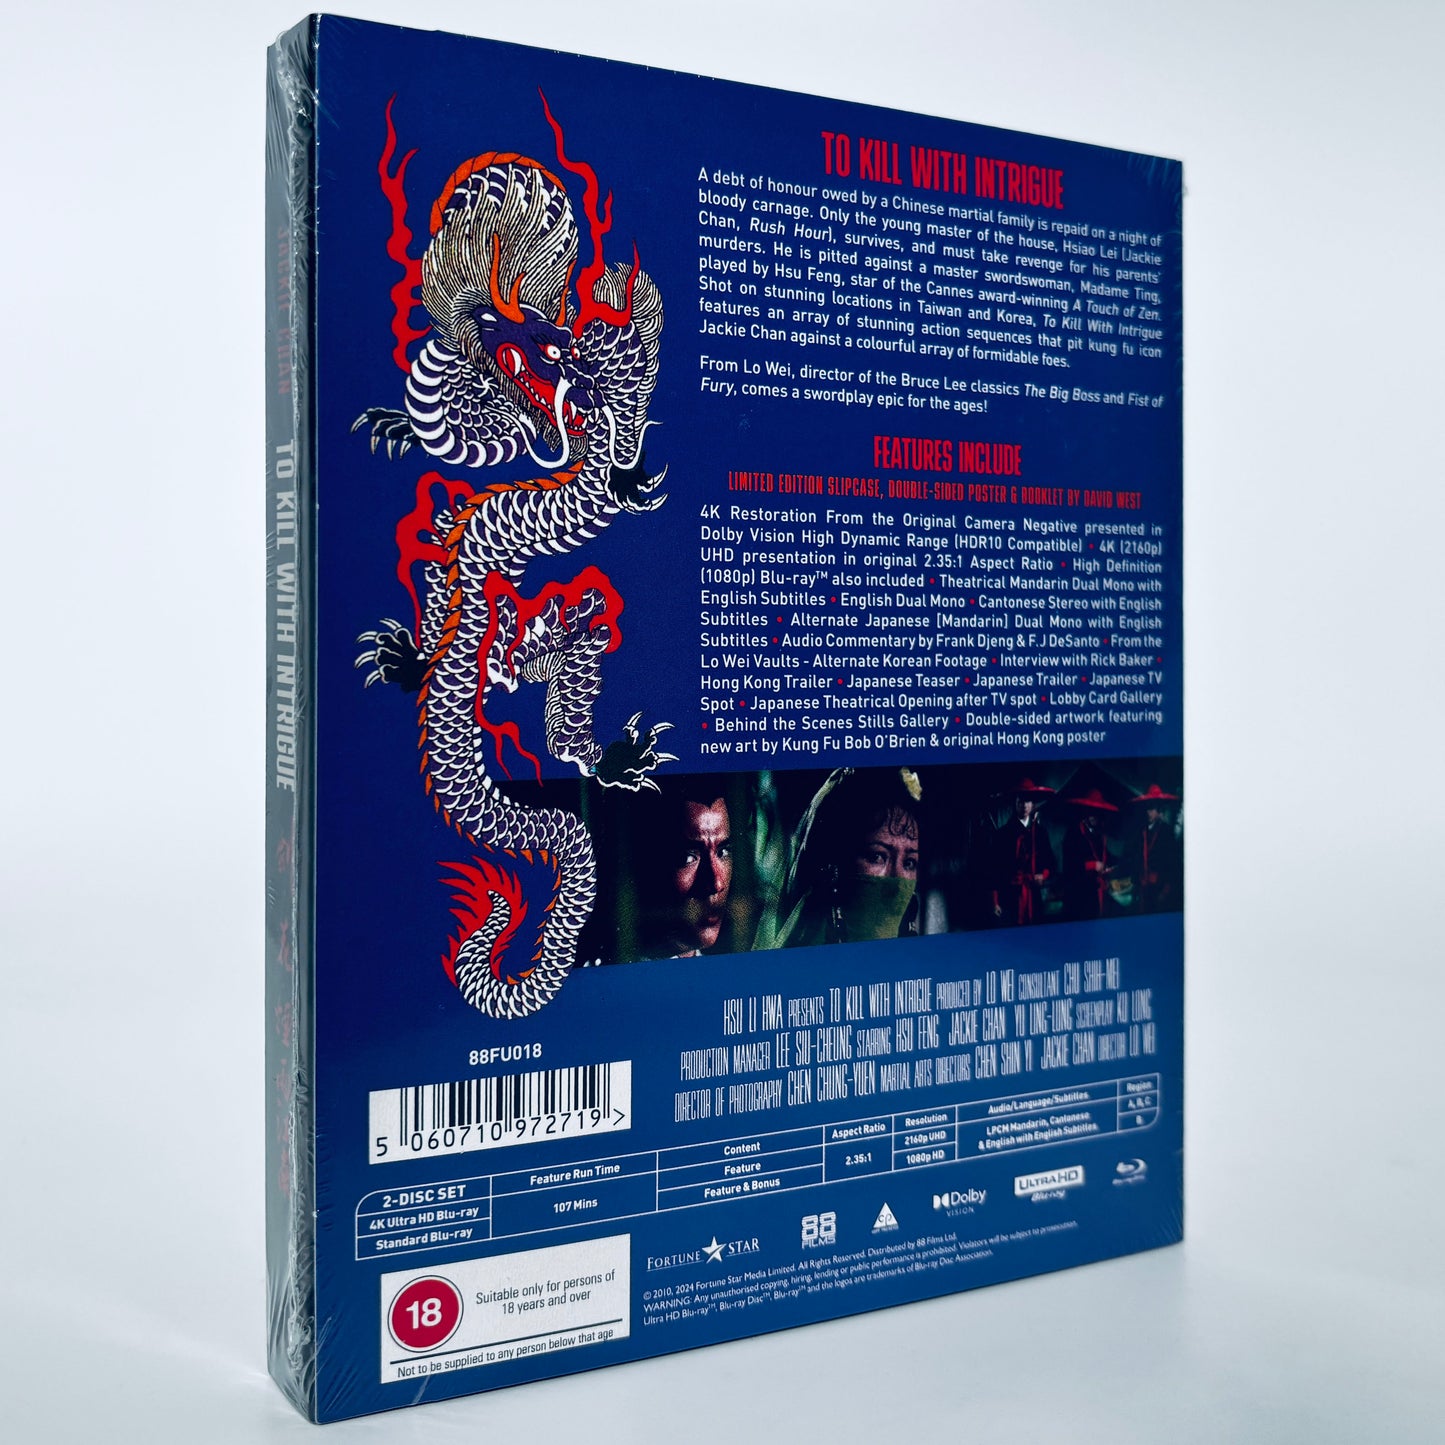 To Kill with Intrigue 4K Ultra HD Ultra UHD Jackie Chan Lo Wei Blu-ray 88 Fil